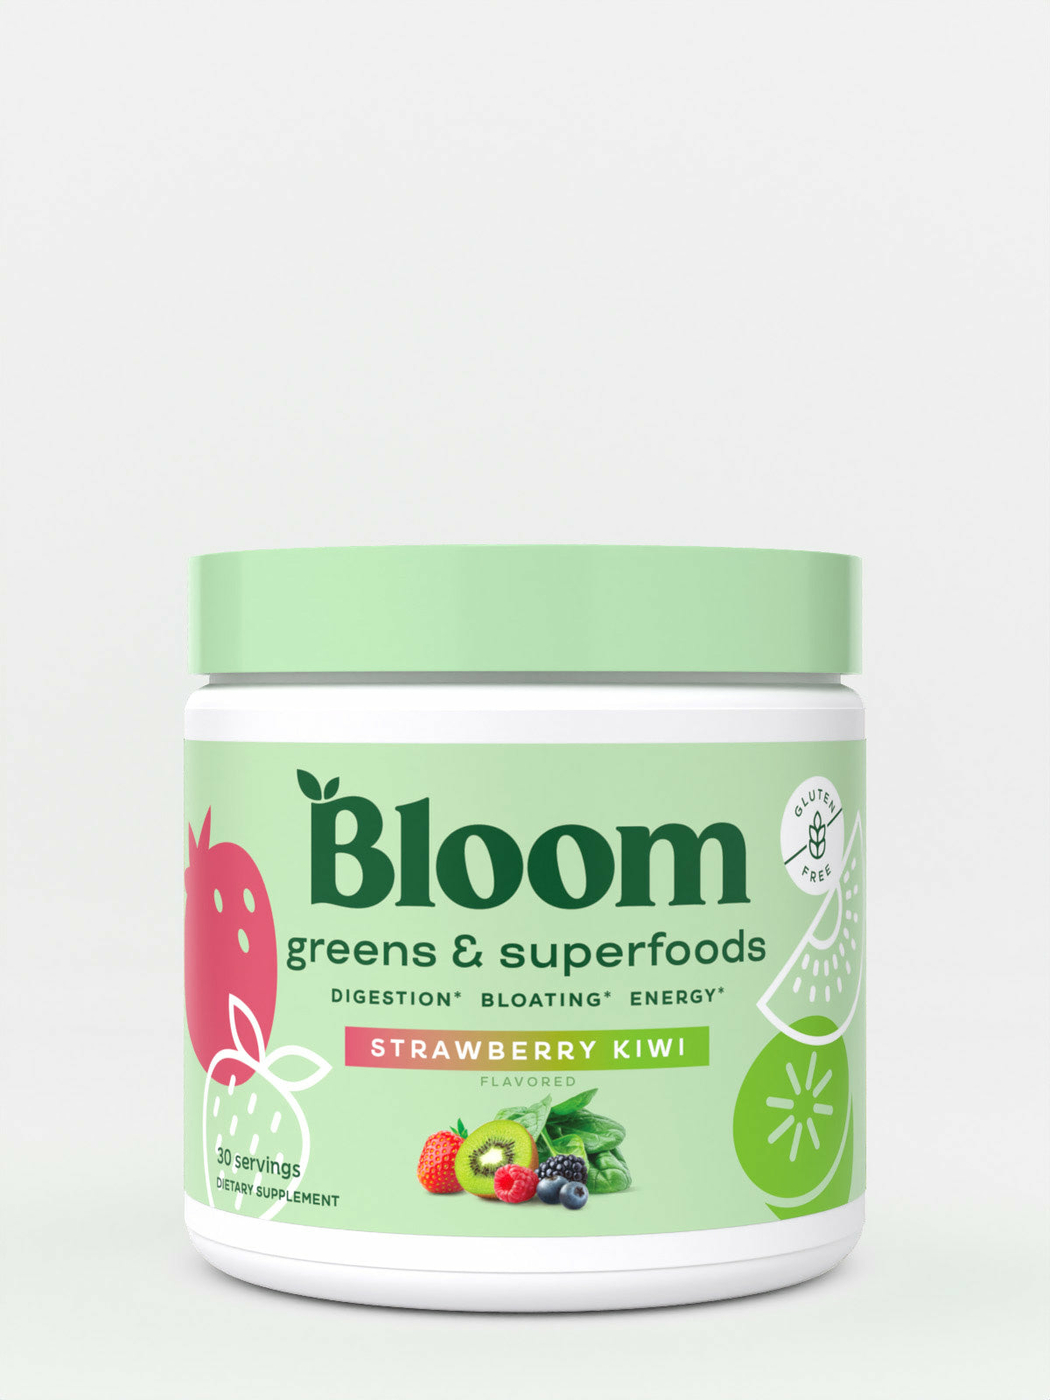 Bloom Nutrition